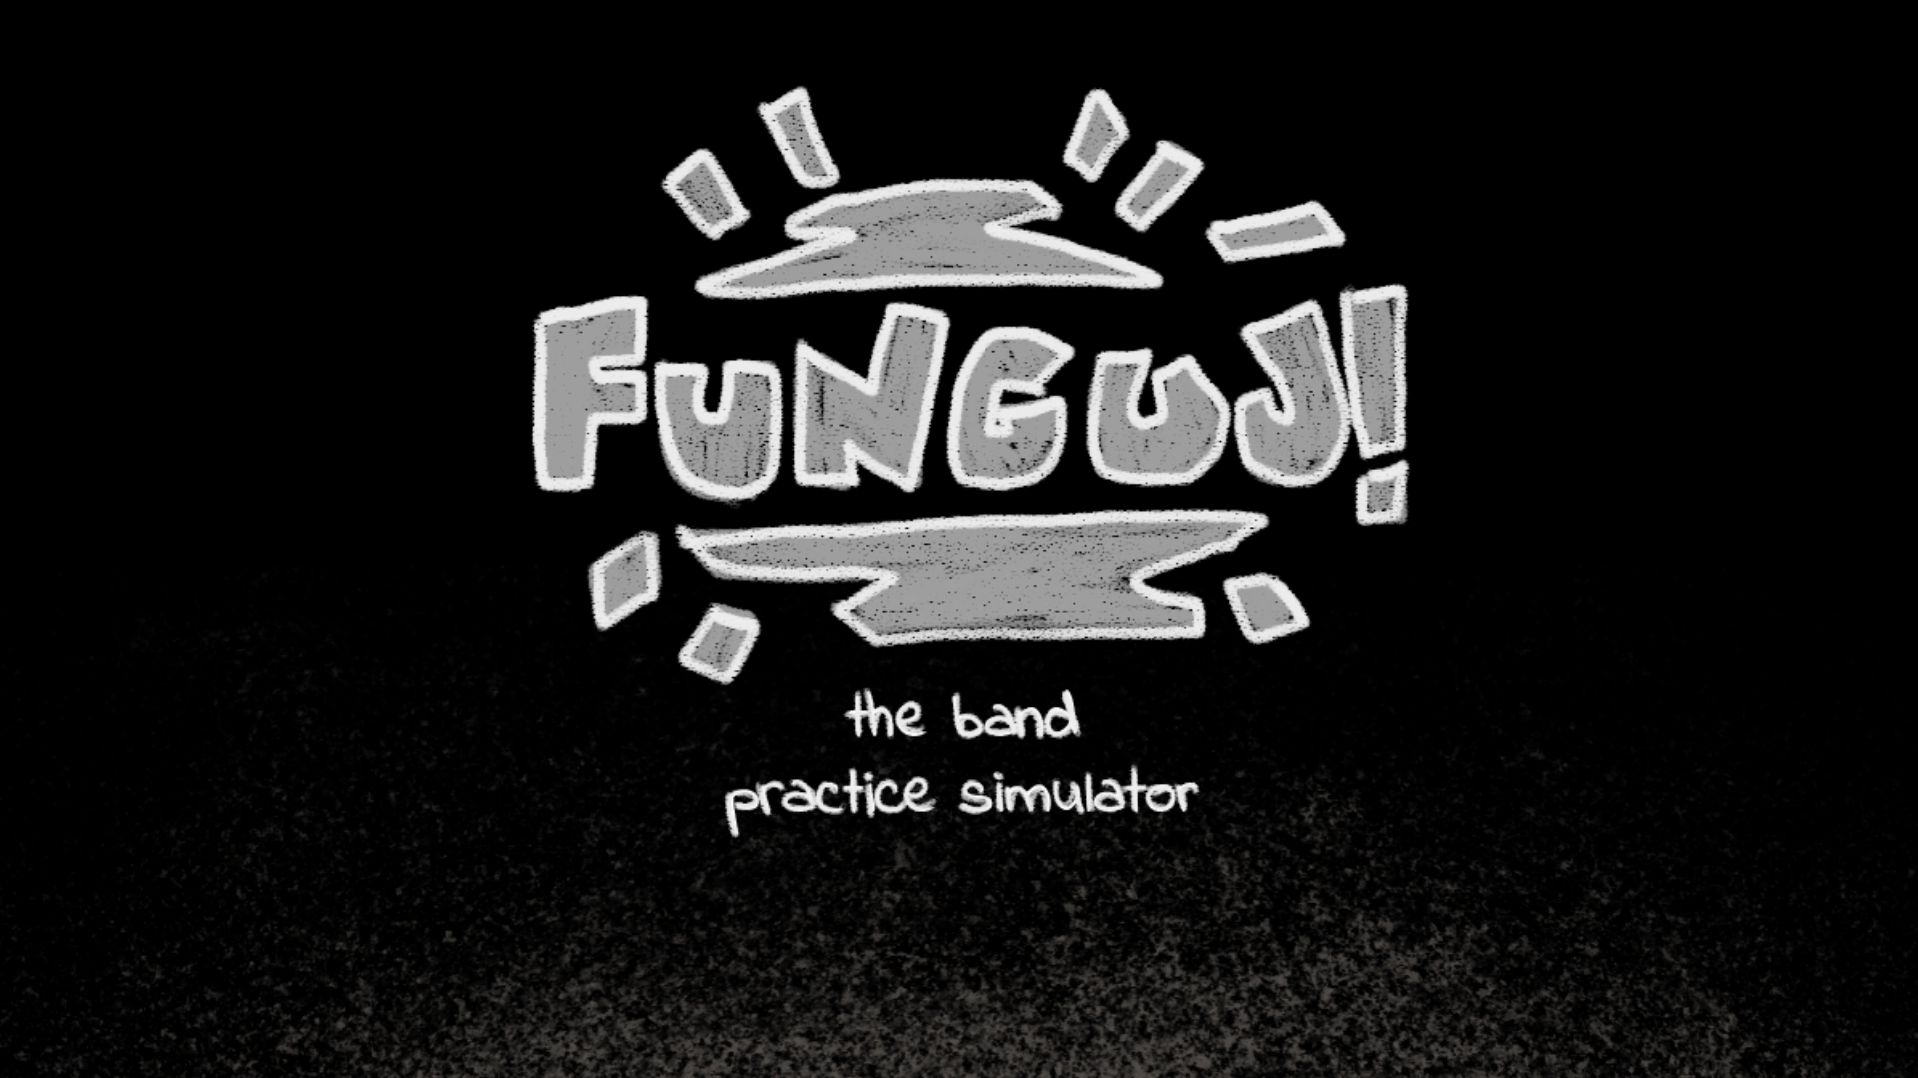 Funguj! the band practice simulator